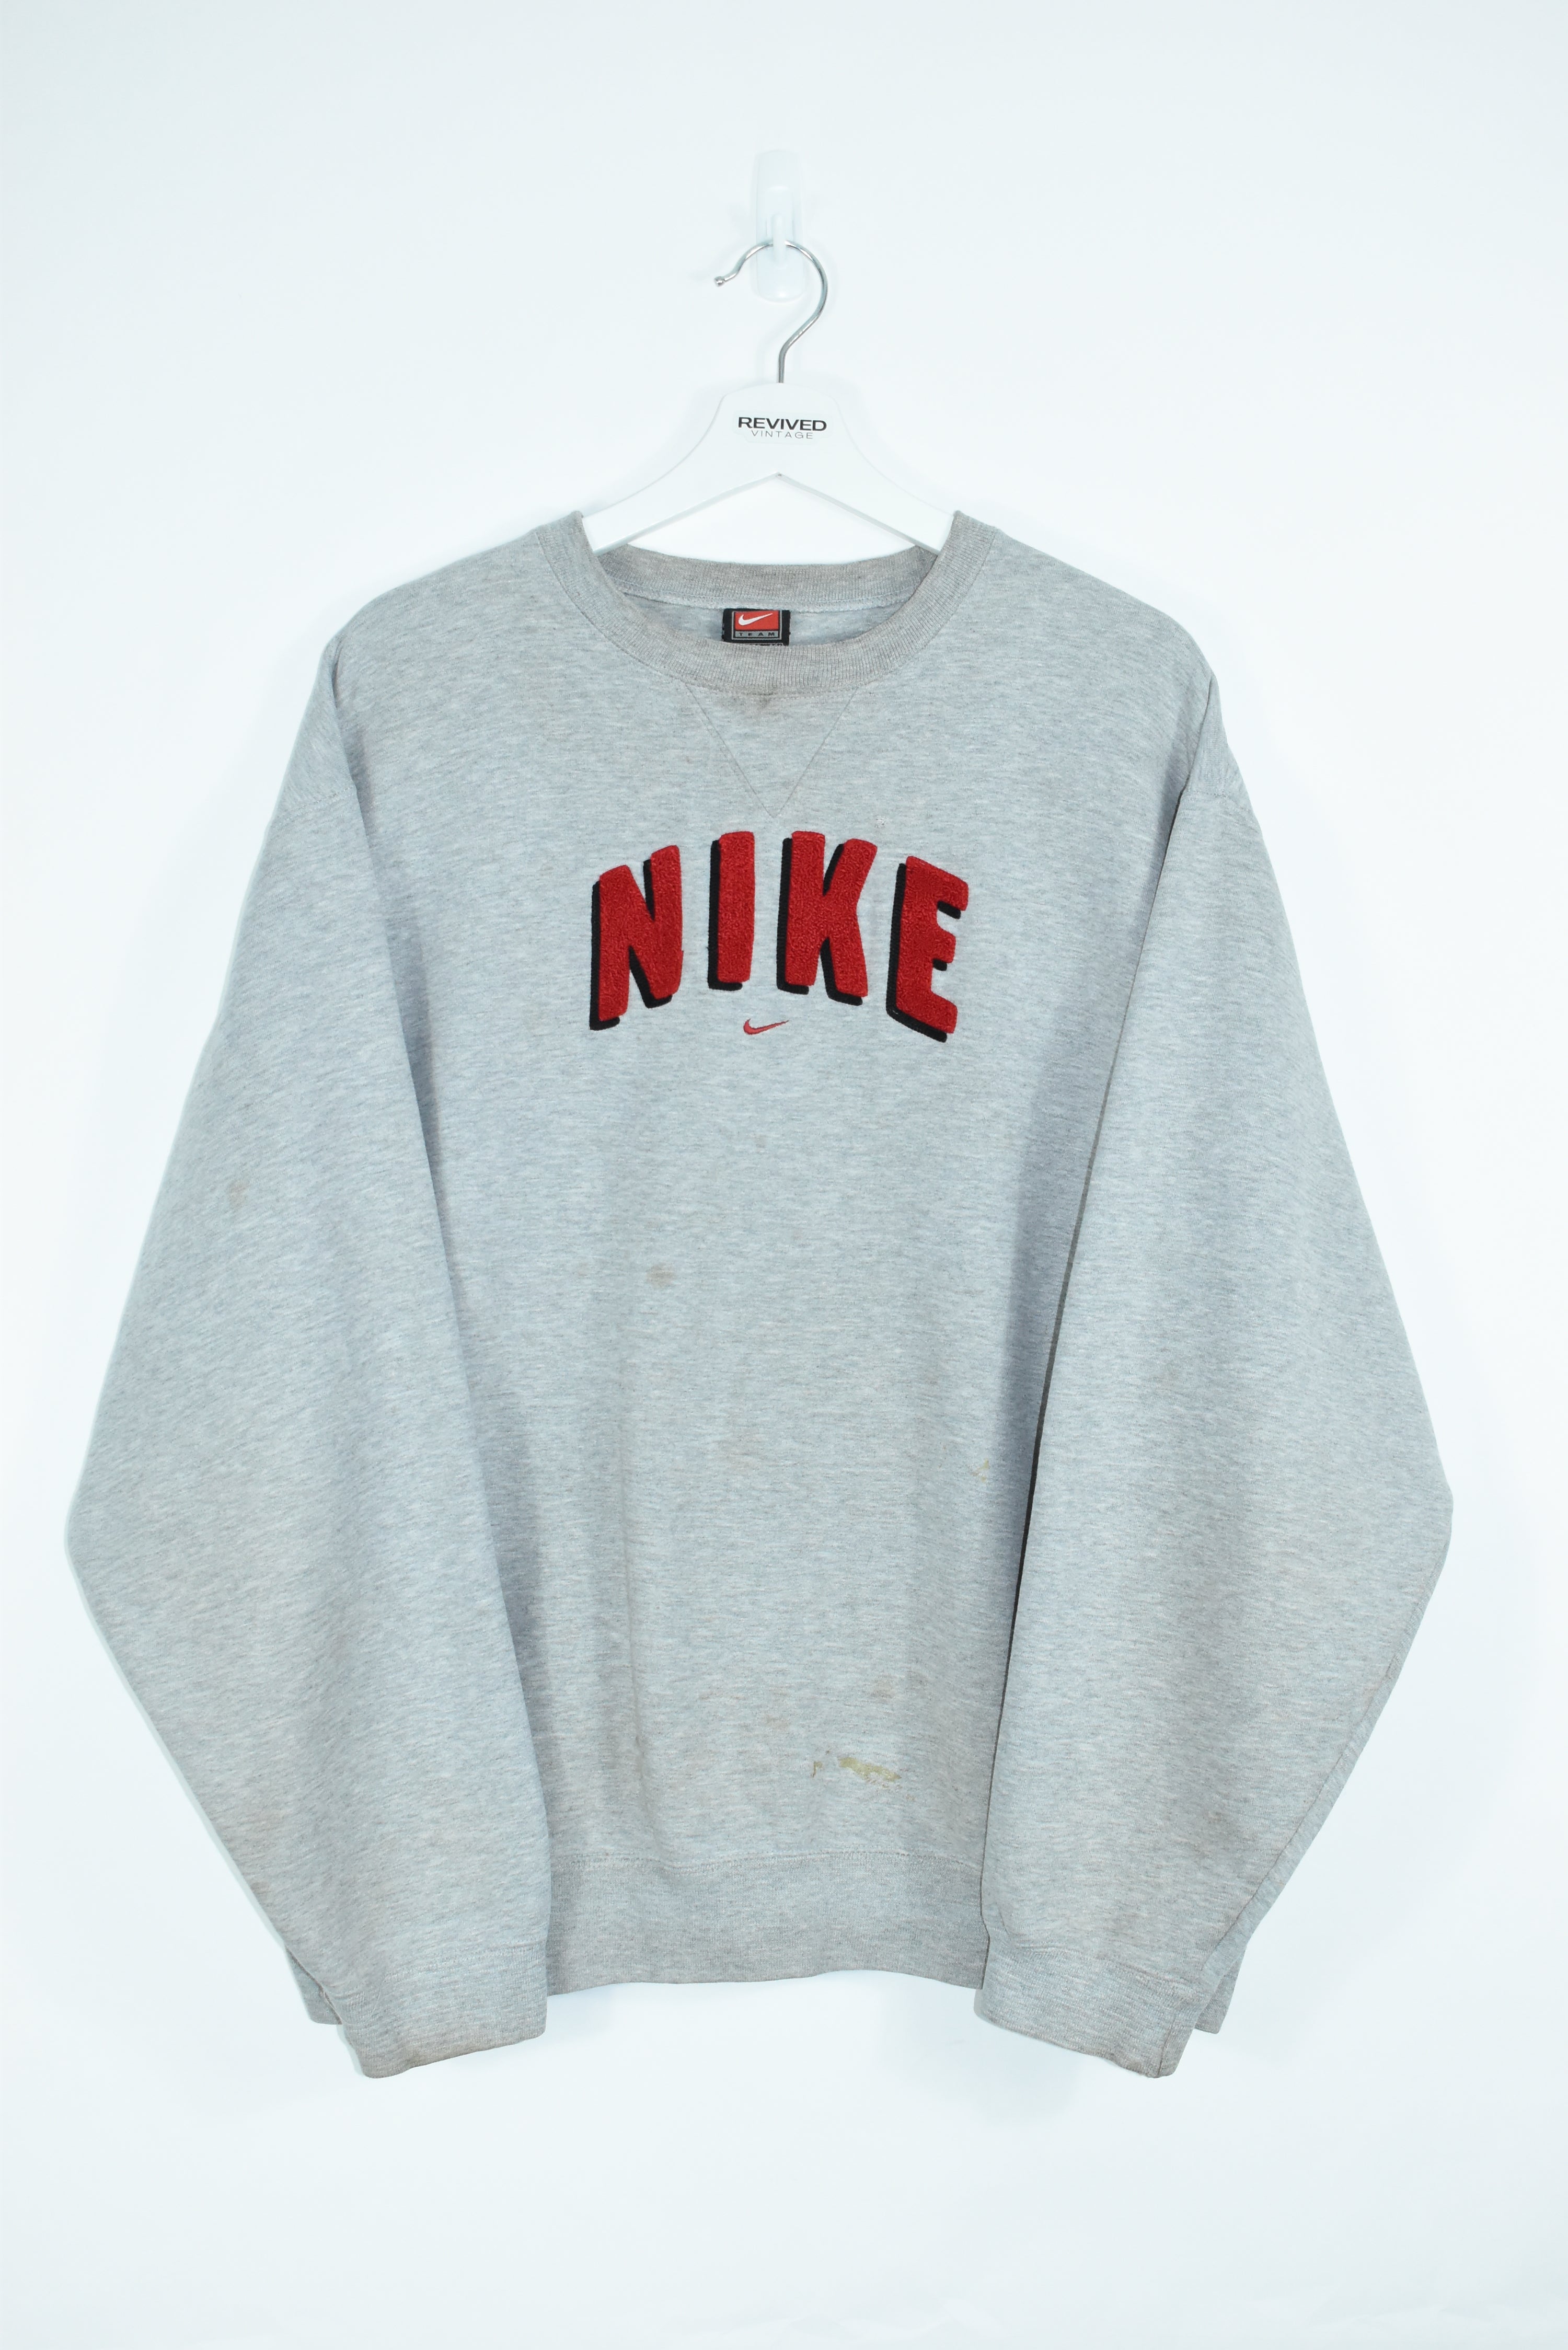 Vintage RARE Nike Puff Print Embroidery Sweatshirt XLARGE